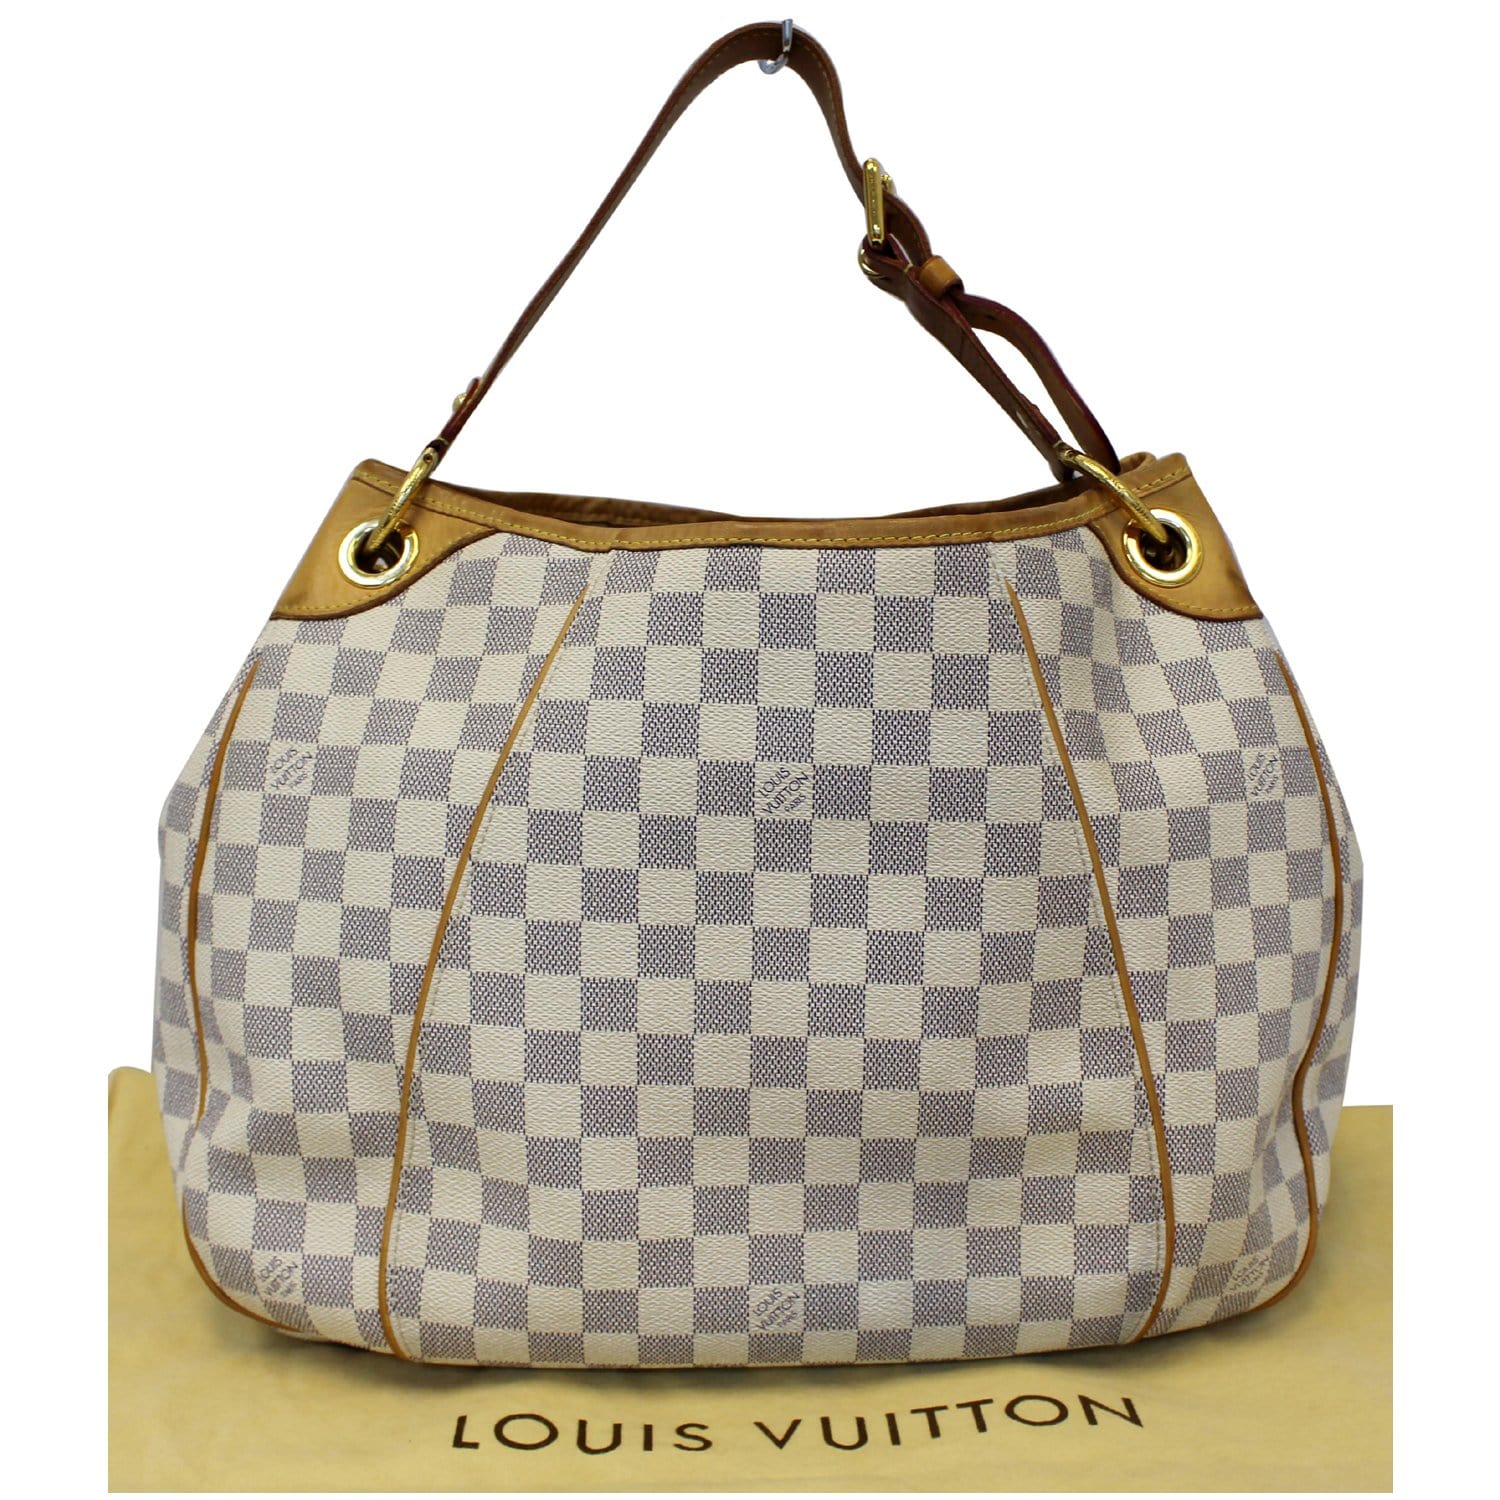 Louis Vuitton Damier Azur Galliera PM purse